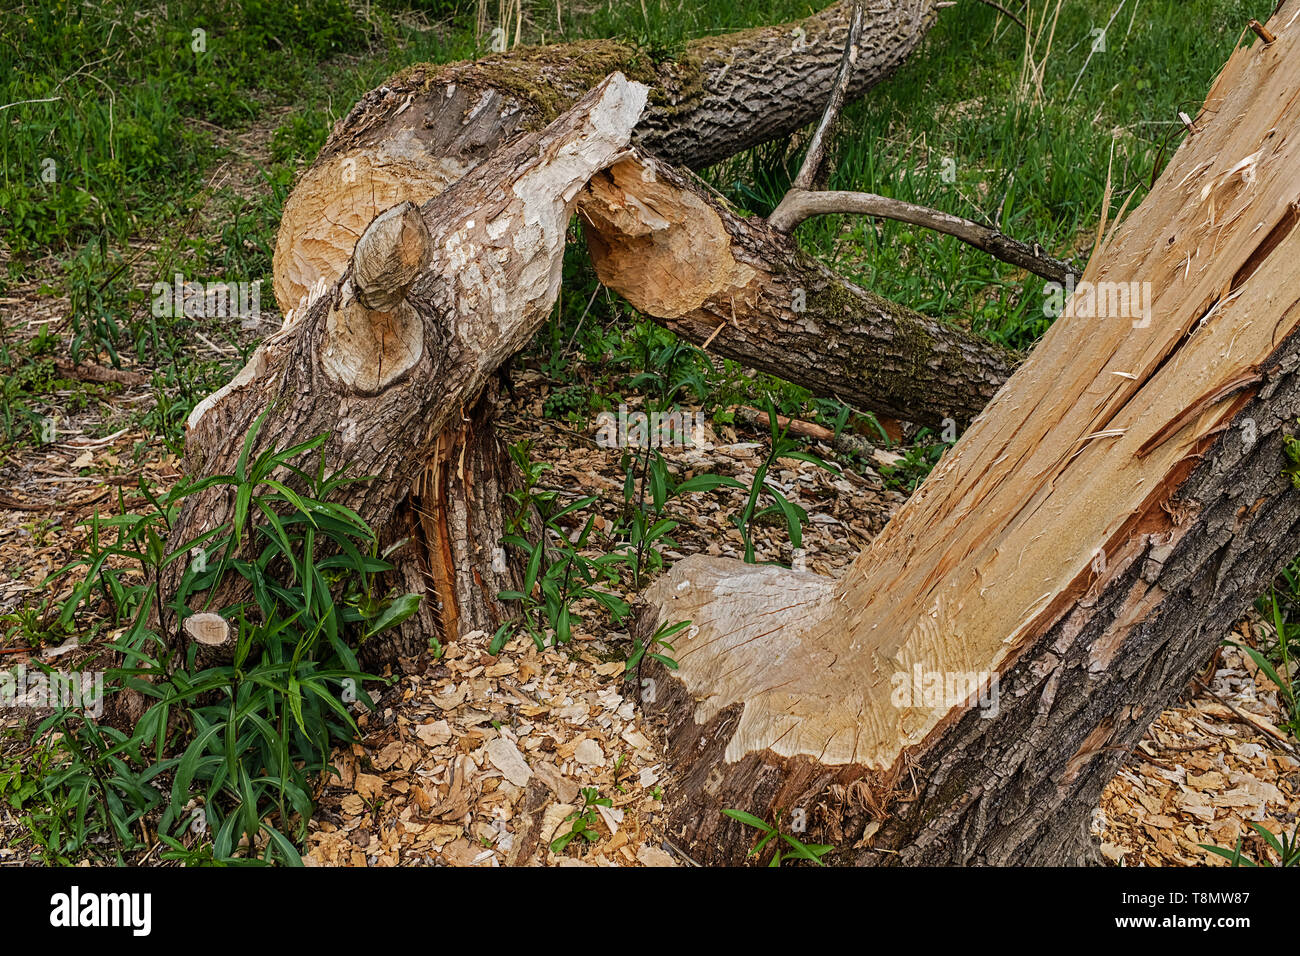 beaver area, gnawed, felled trees Stock Photo